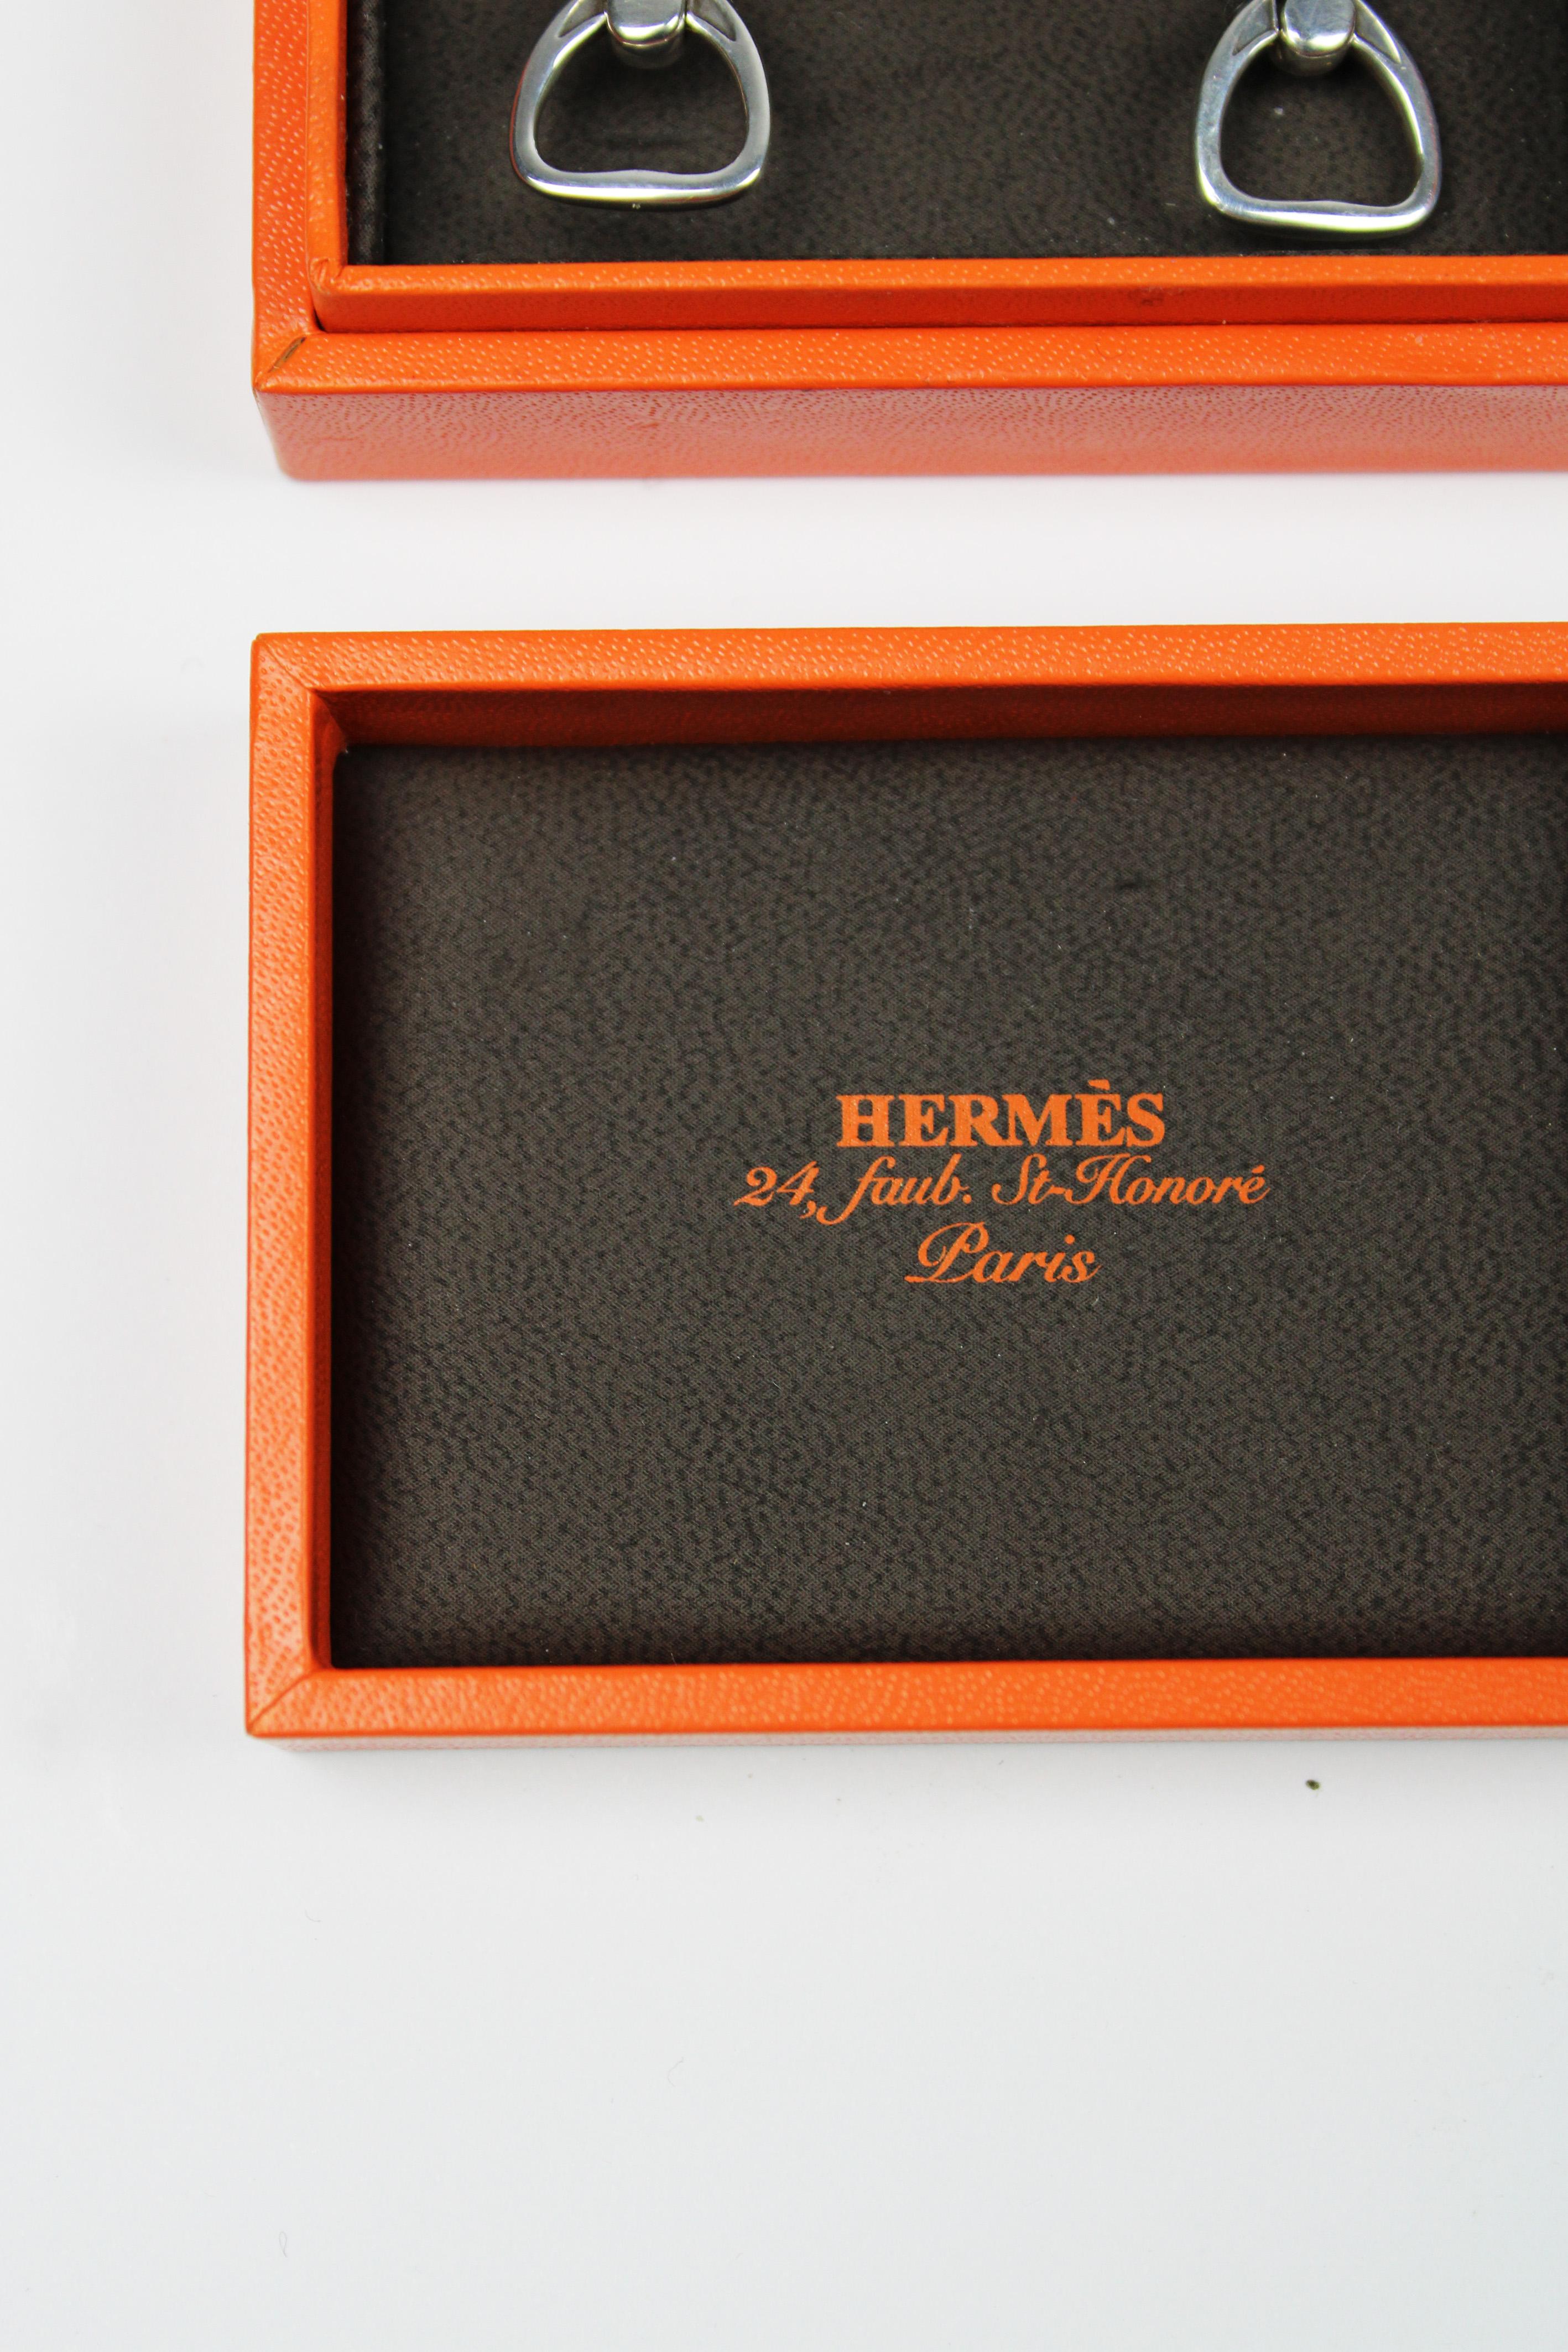 Hermès Sterling Silver Stirrup Cufflinks Box Paris France 21th Century For Sale 2